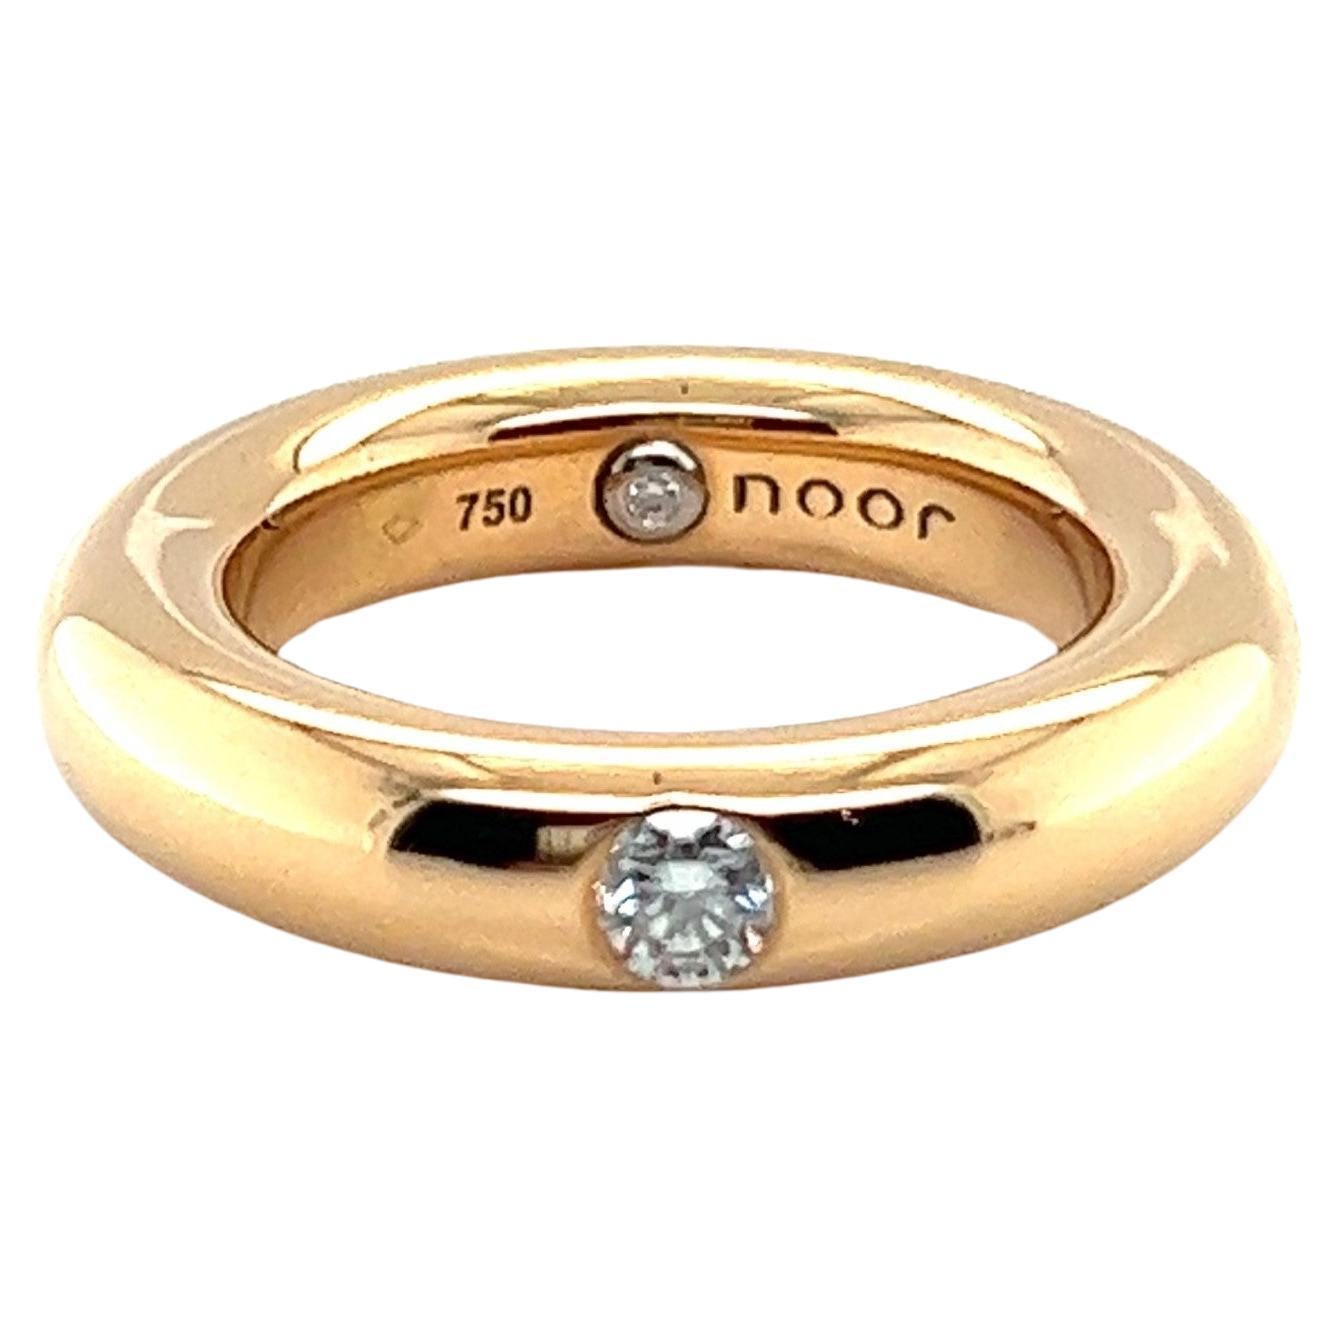 Elegant Band Ring with Diamonds in 18 Karat Red Gold